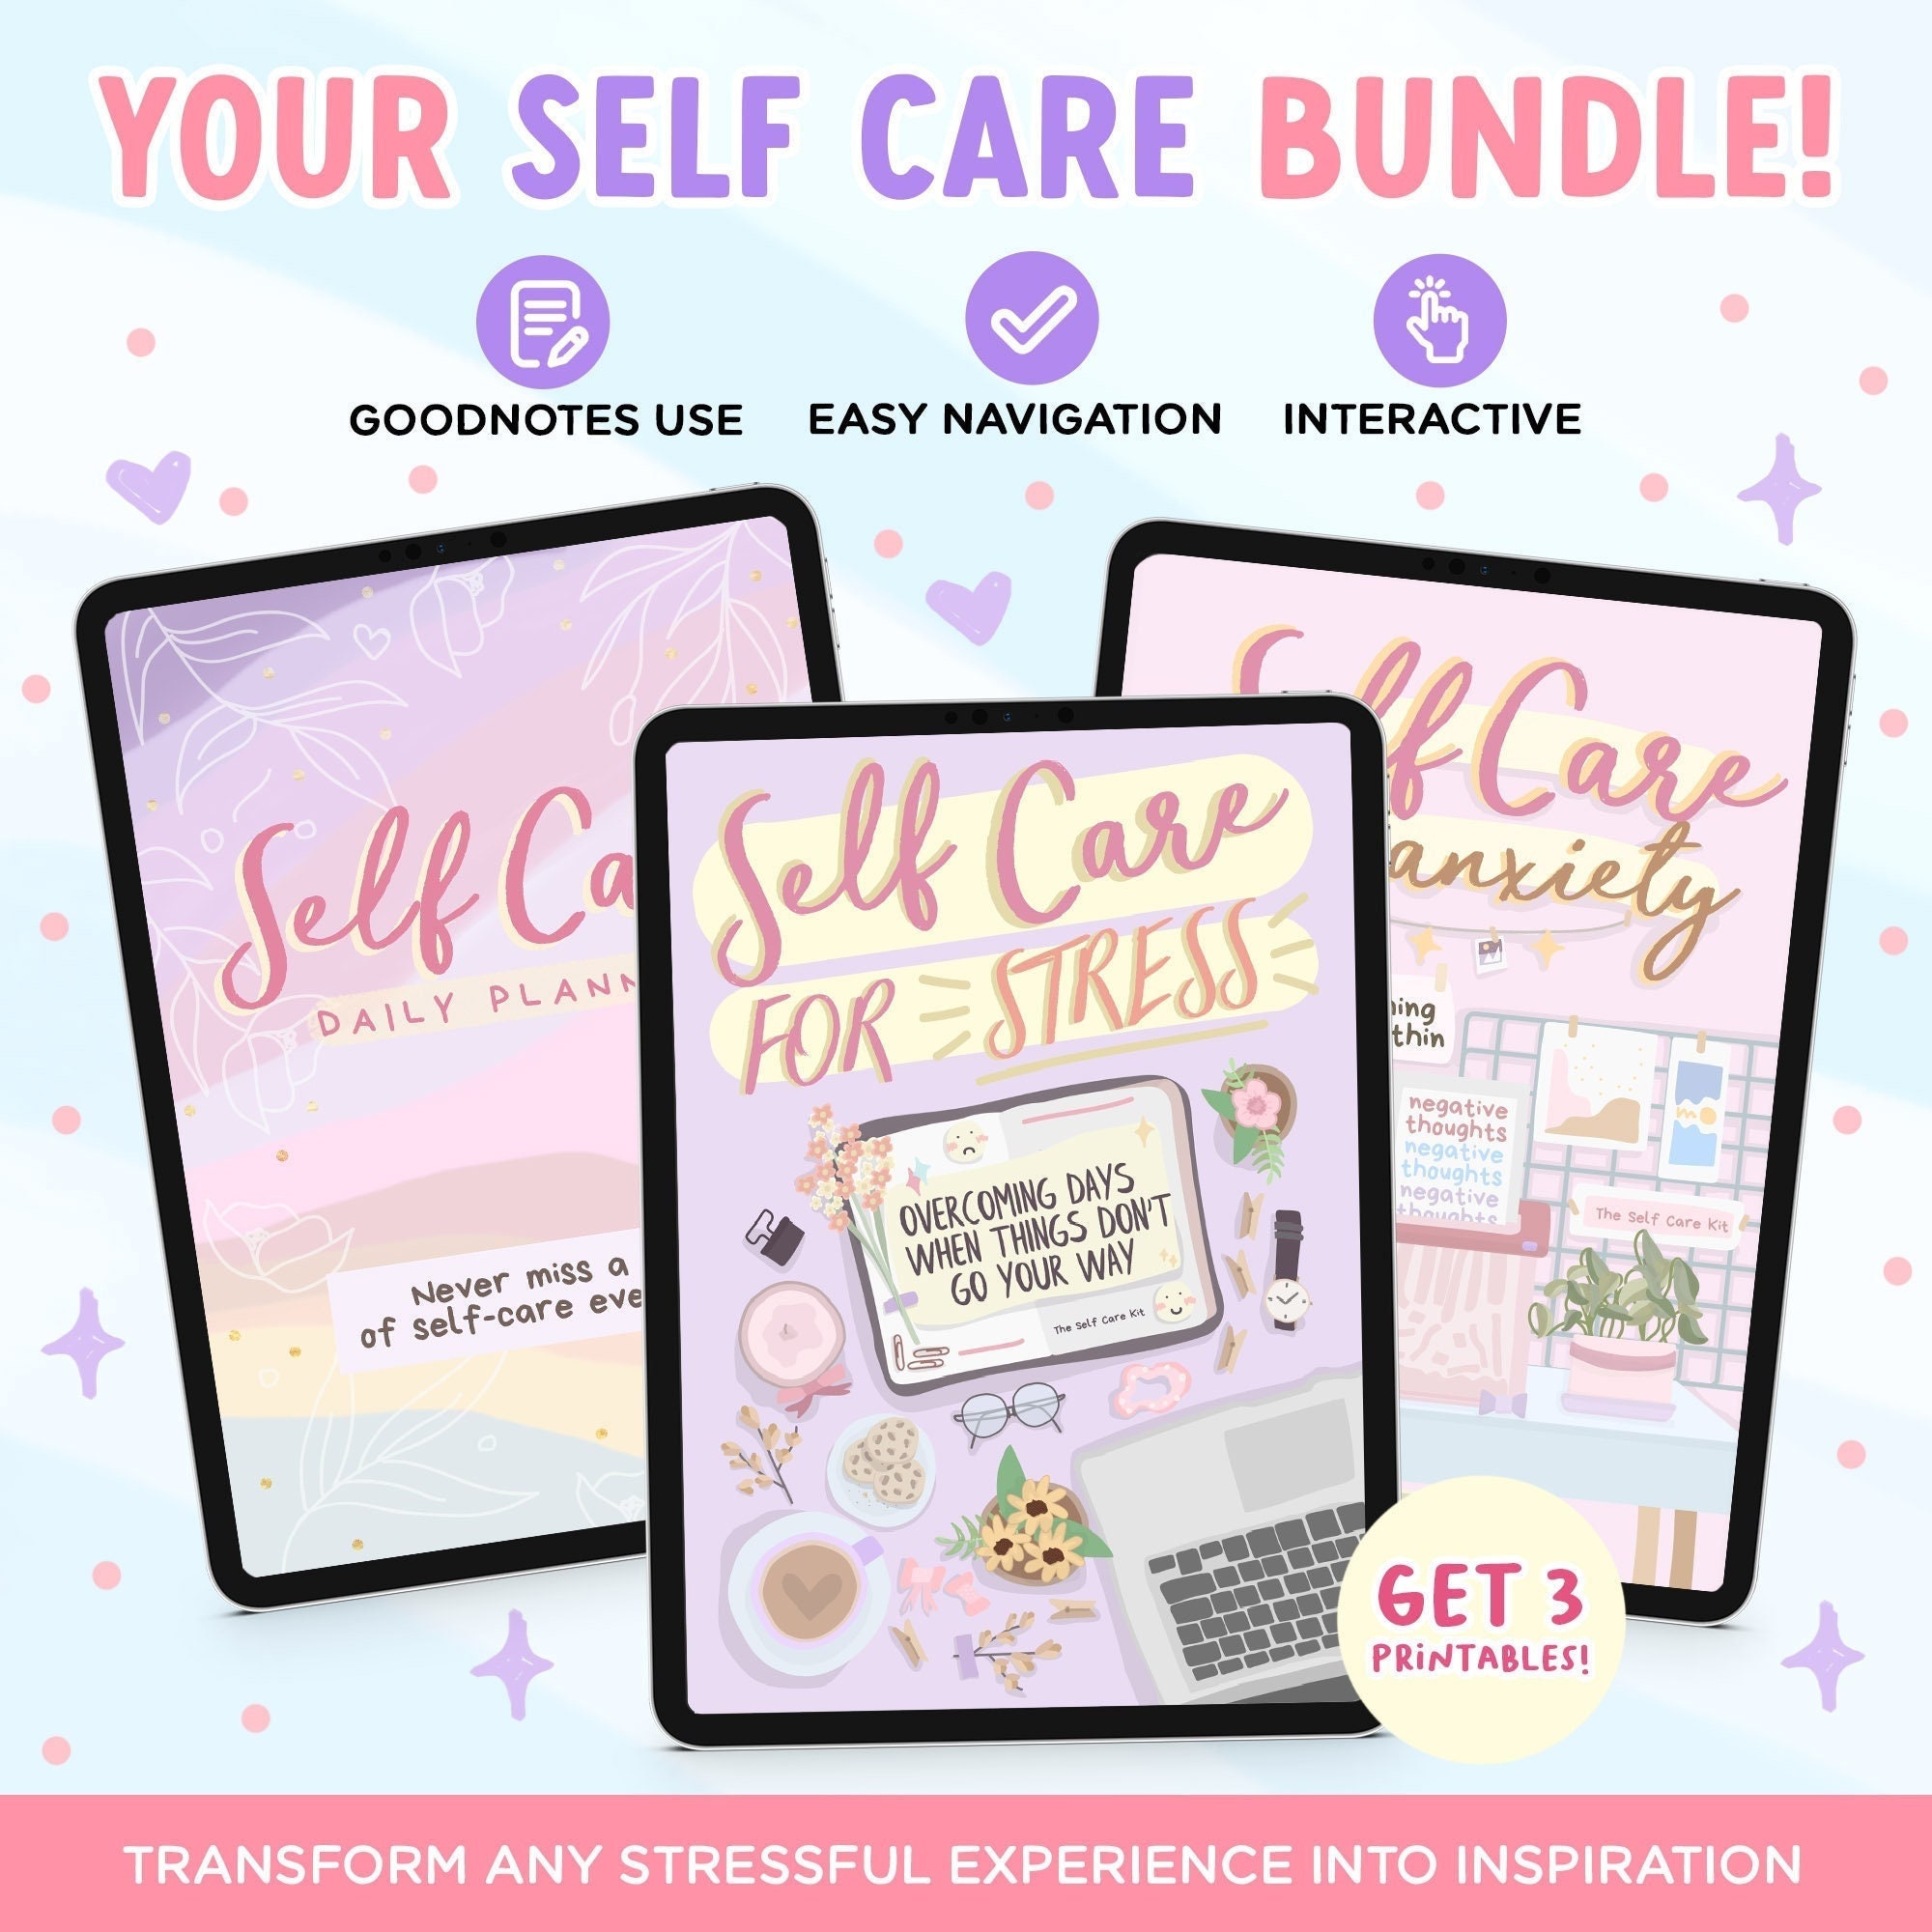 The Self-Care Kit